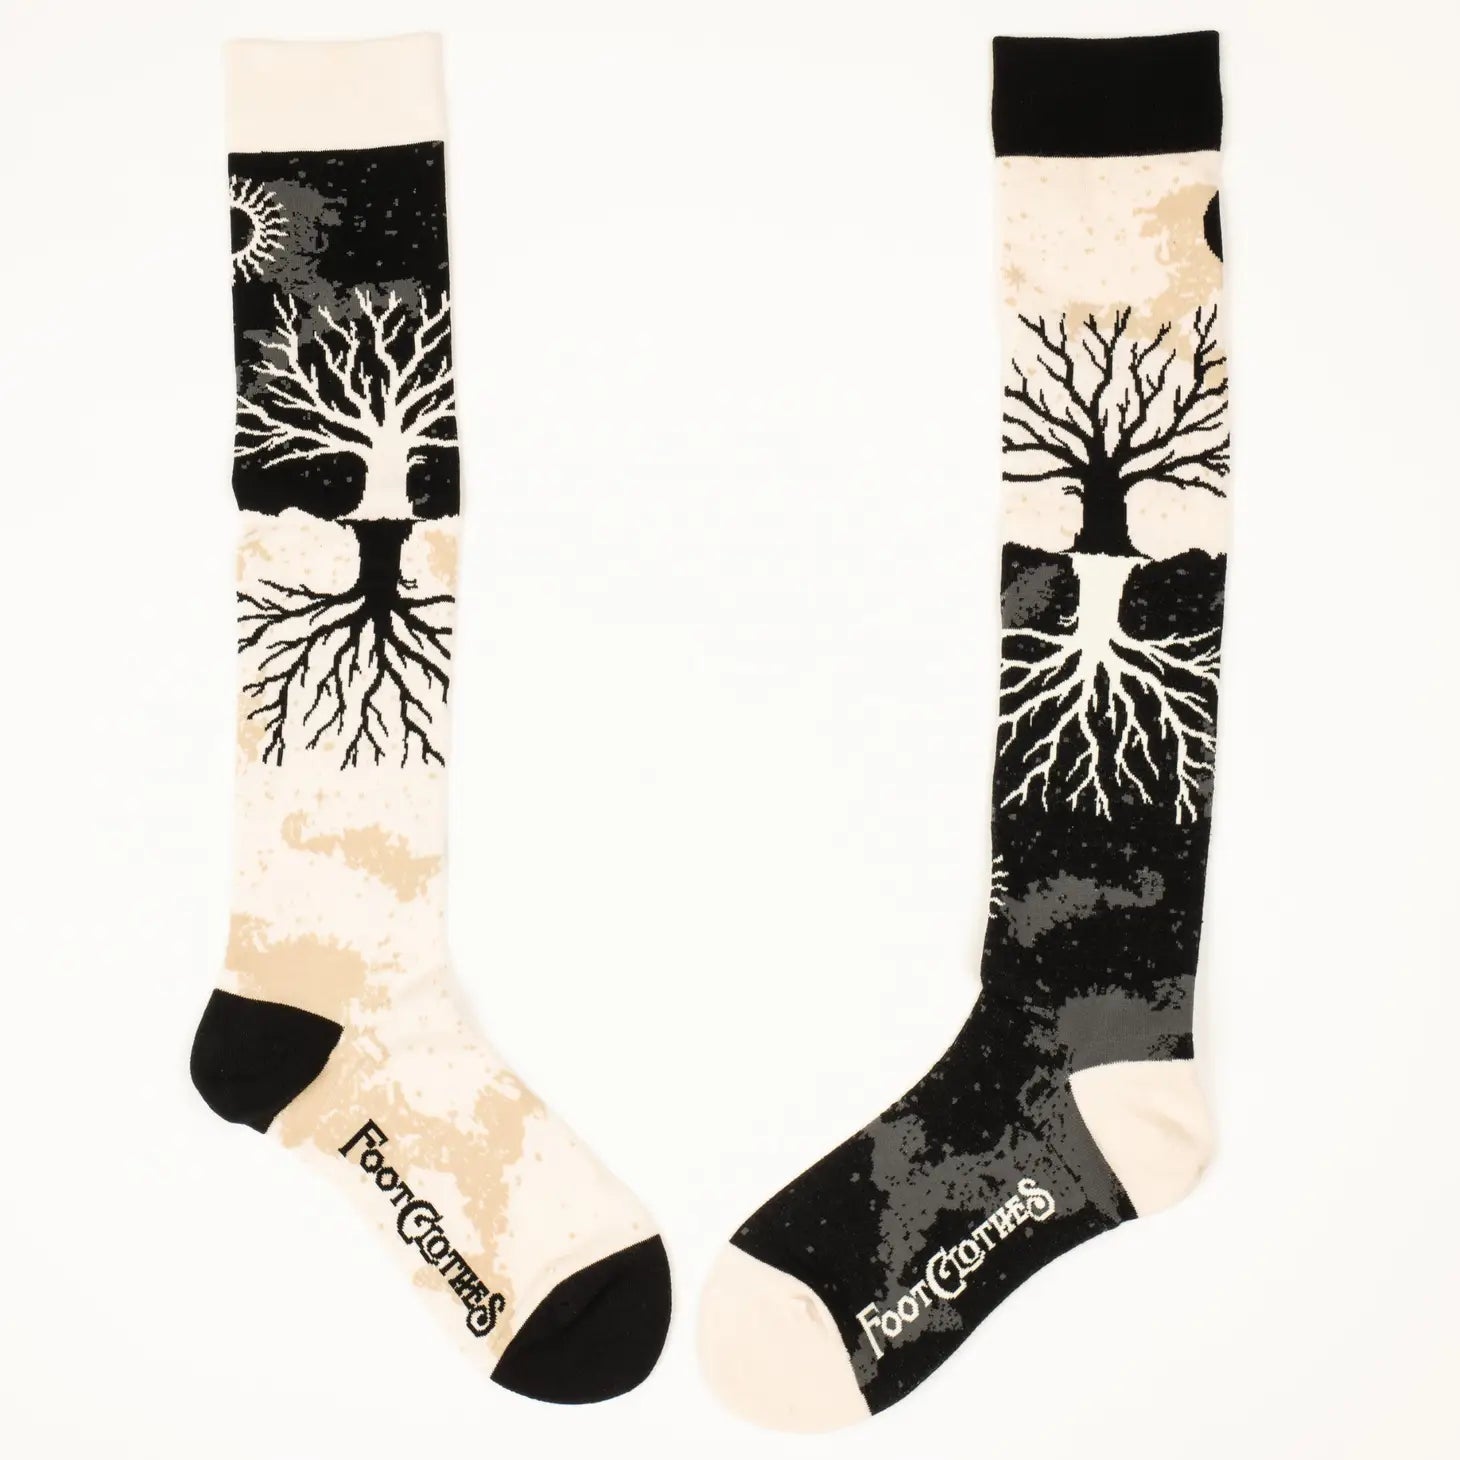 FootClothes LLC - Socks As Above So Below Tree Knee High